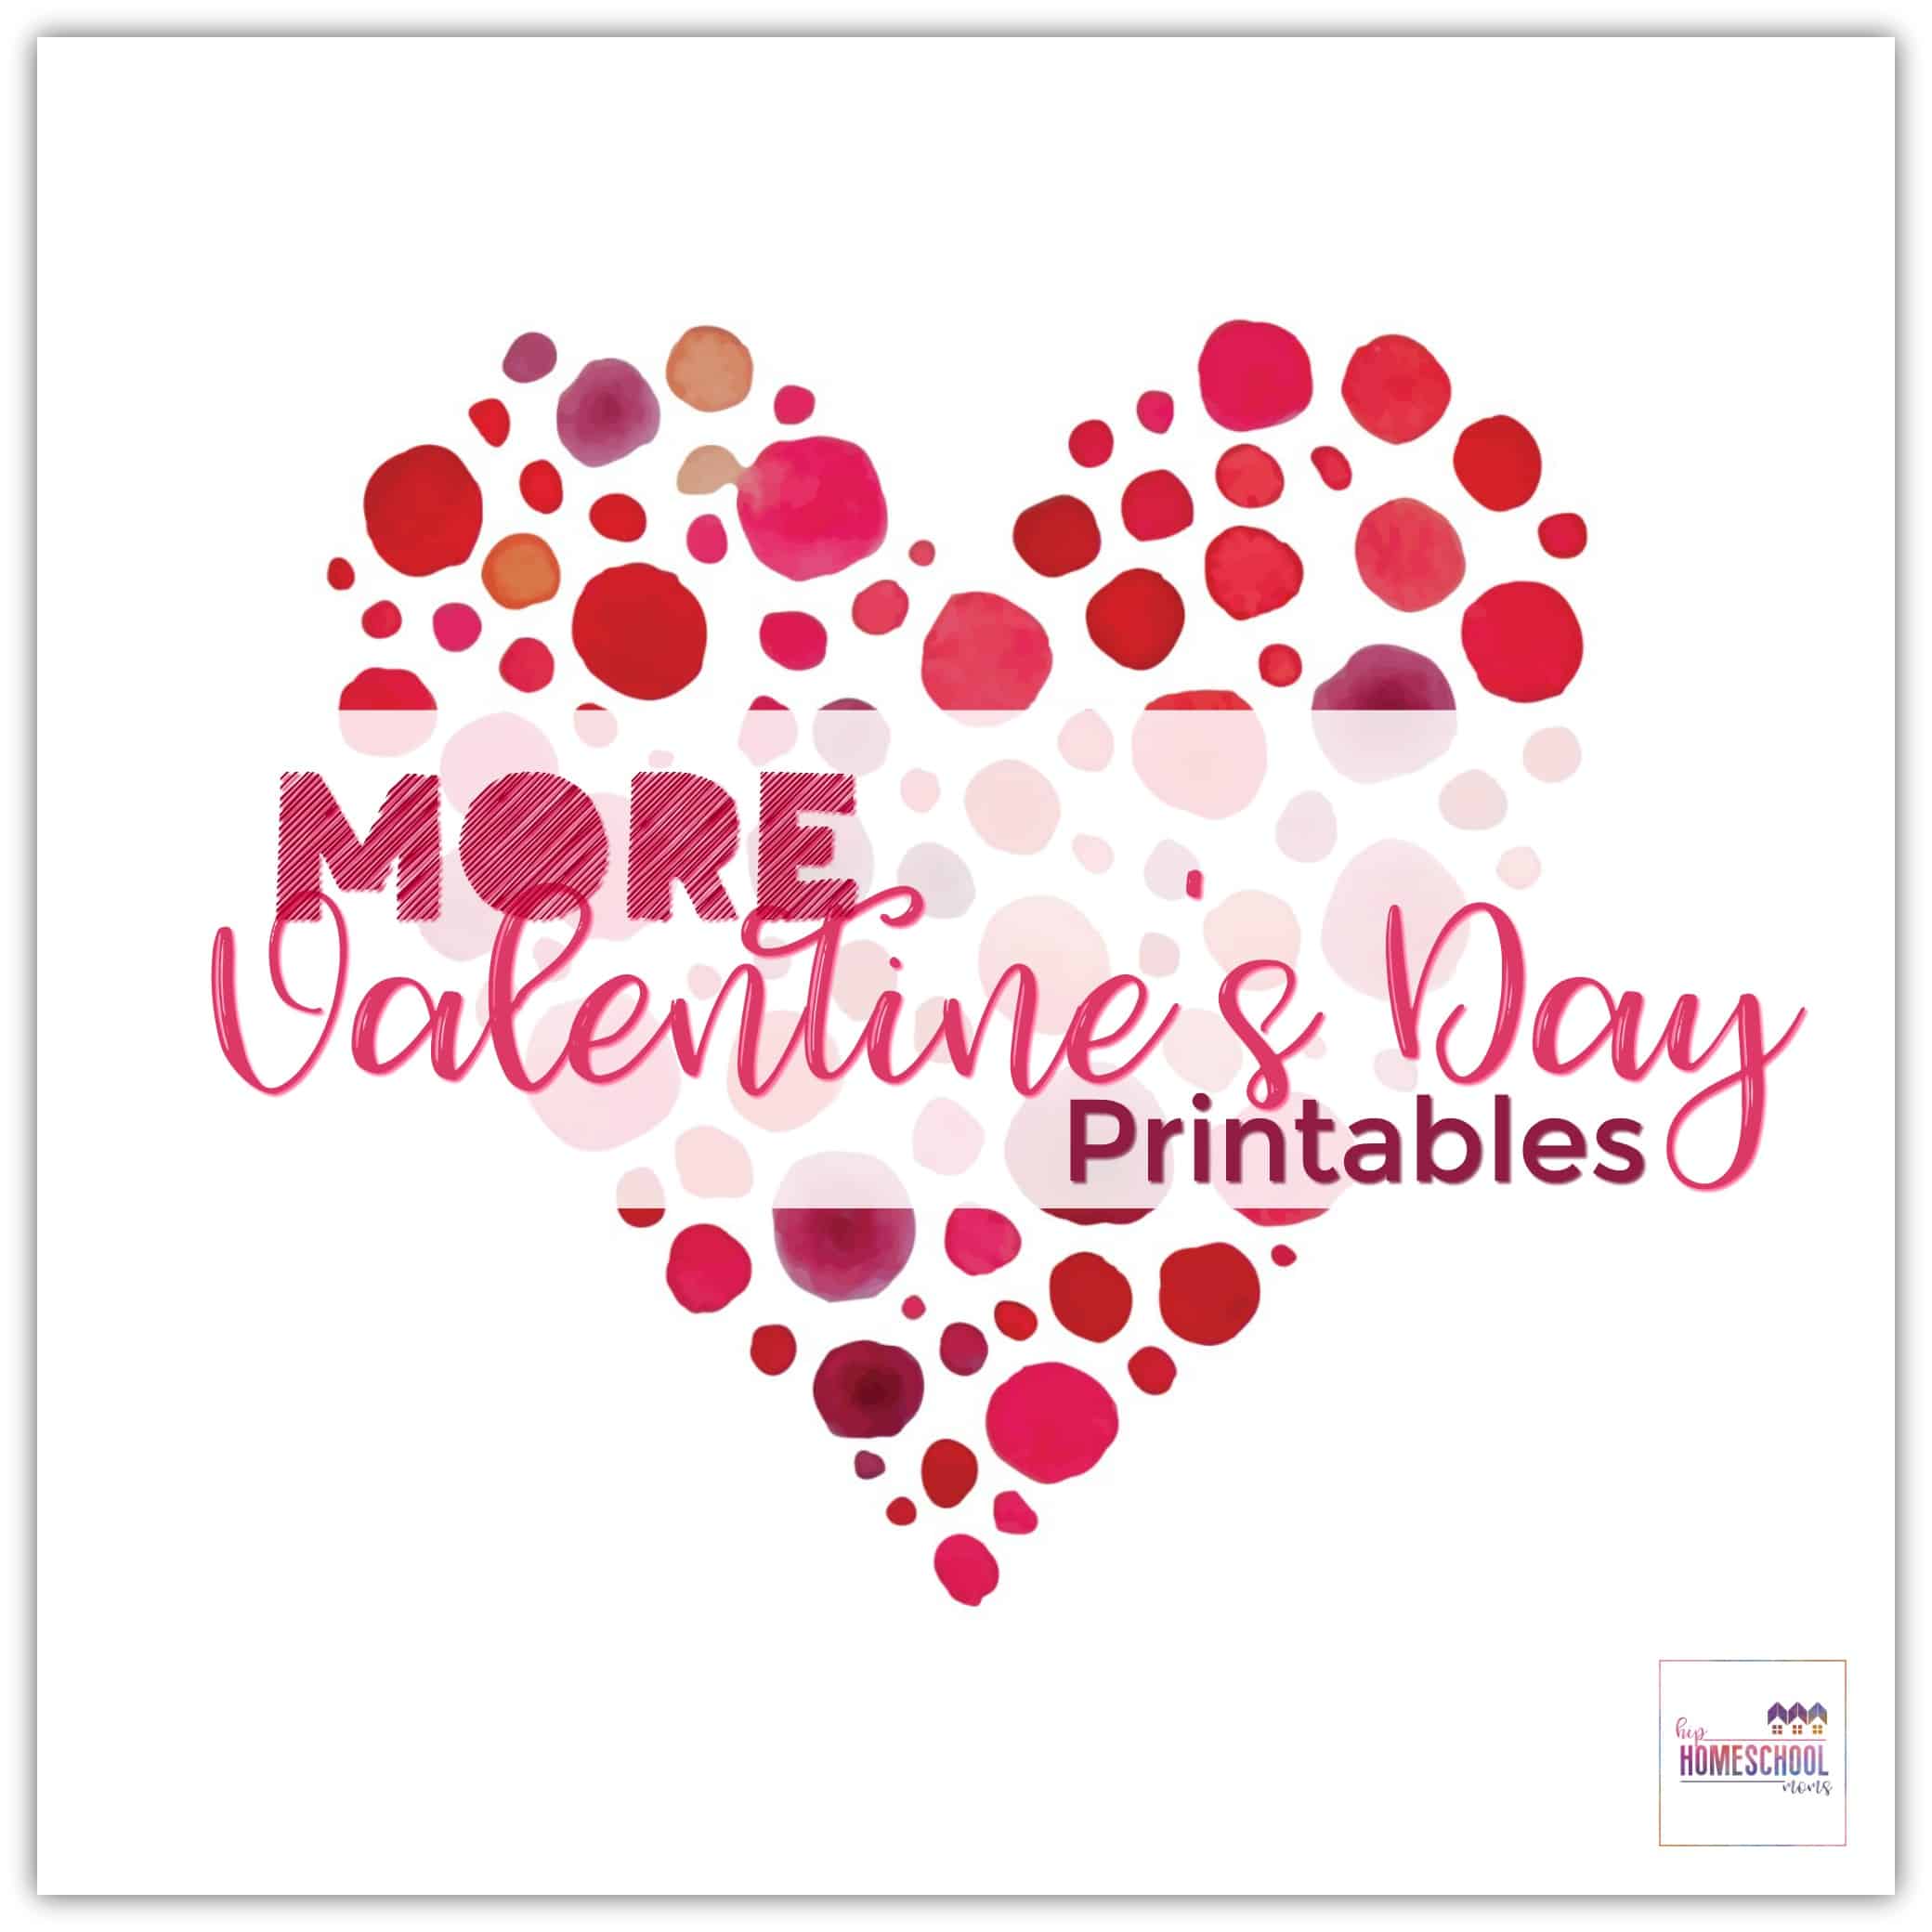 More Valentine’s Day Printables